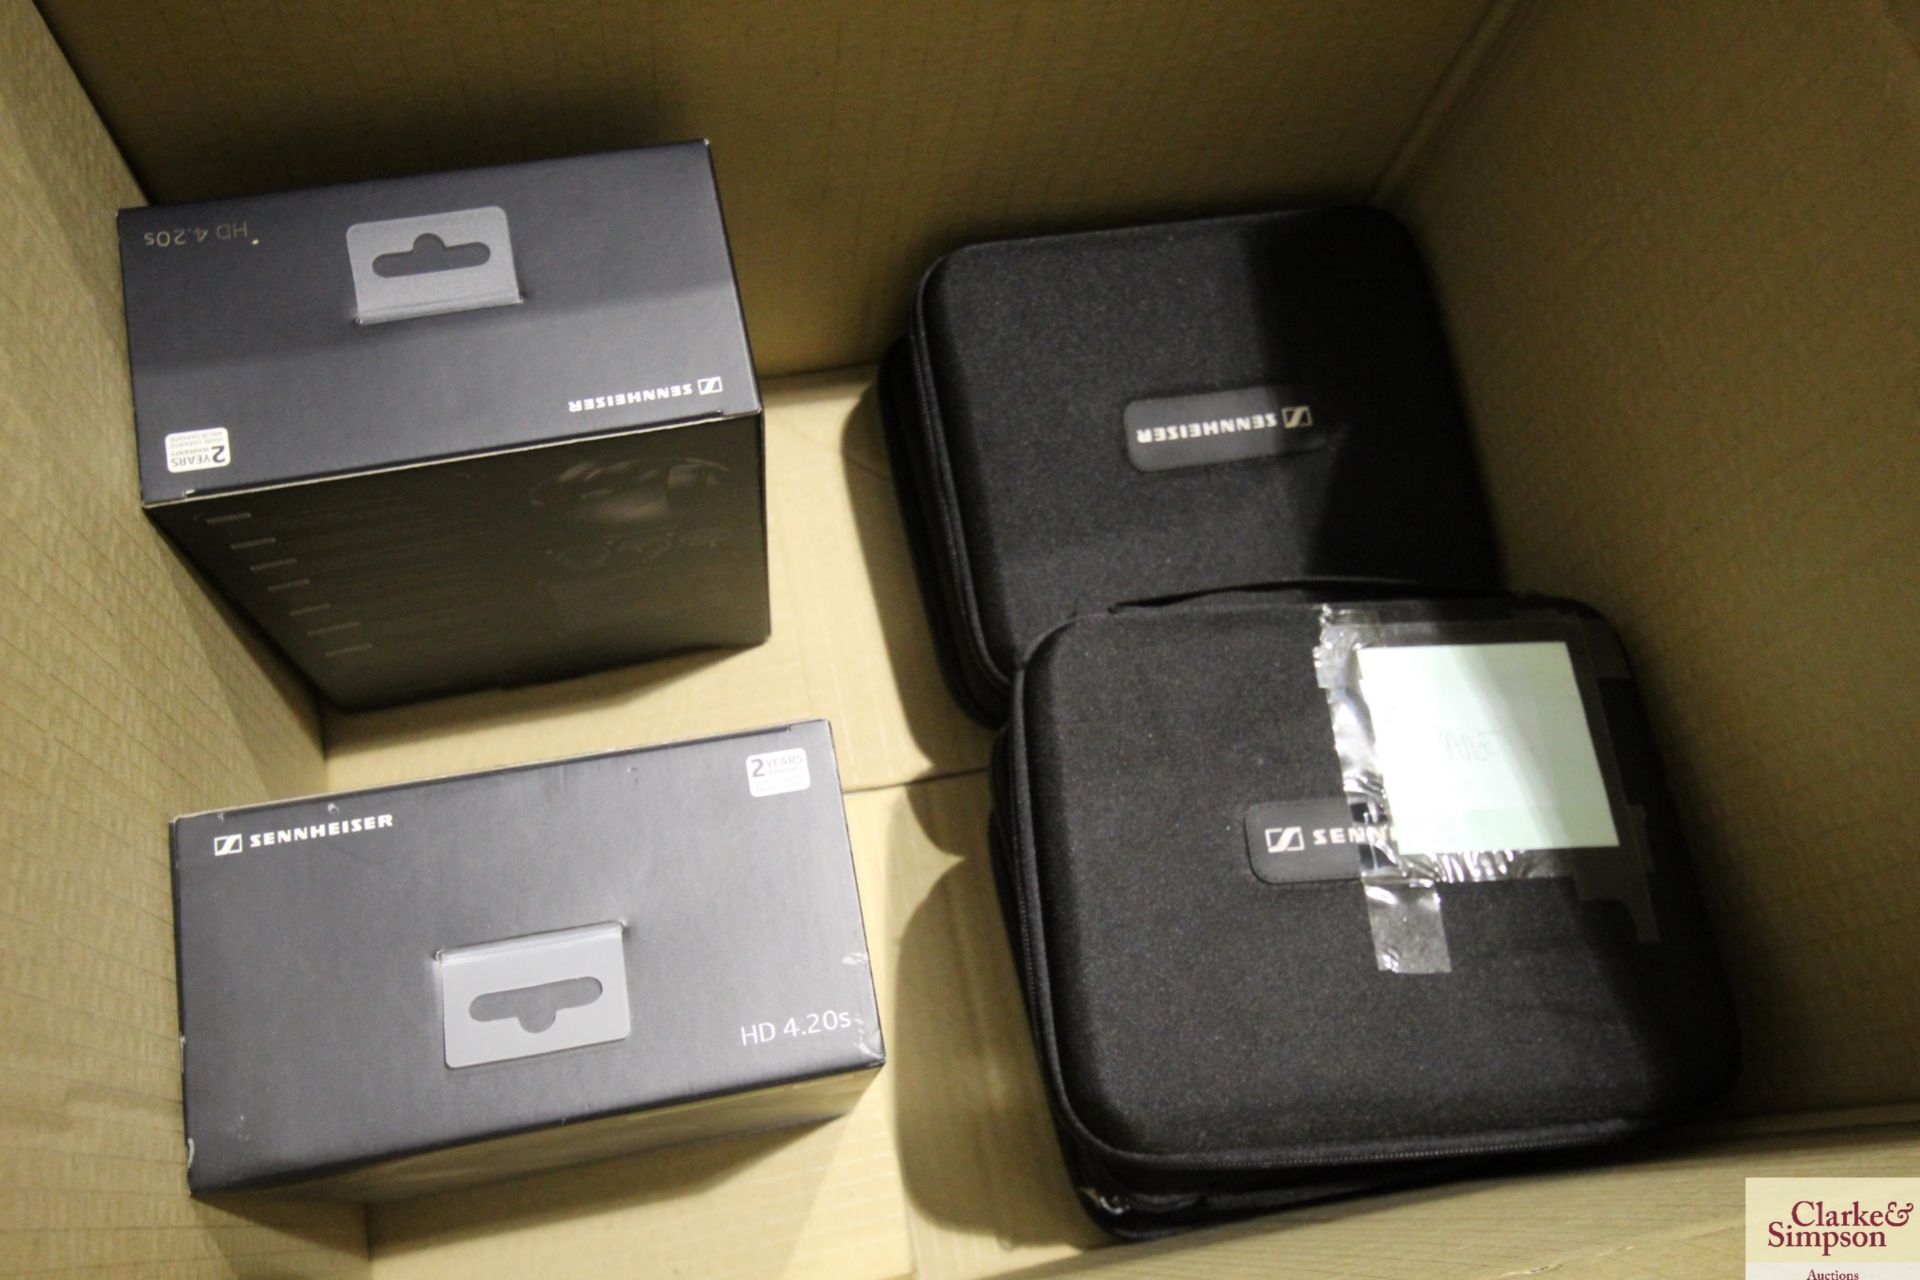 6x Sennheiser HD380 Pro headphones in cases, and 3x Sennheiser HD4.20S headphones in boxes. V - Image 2 of 4